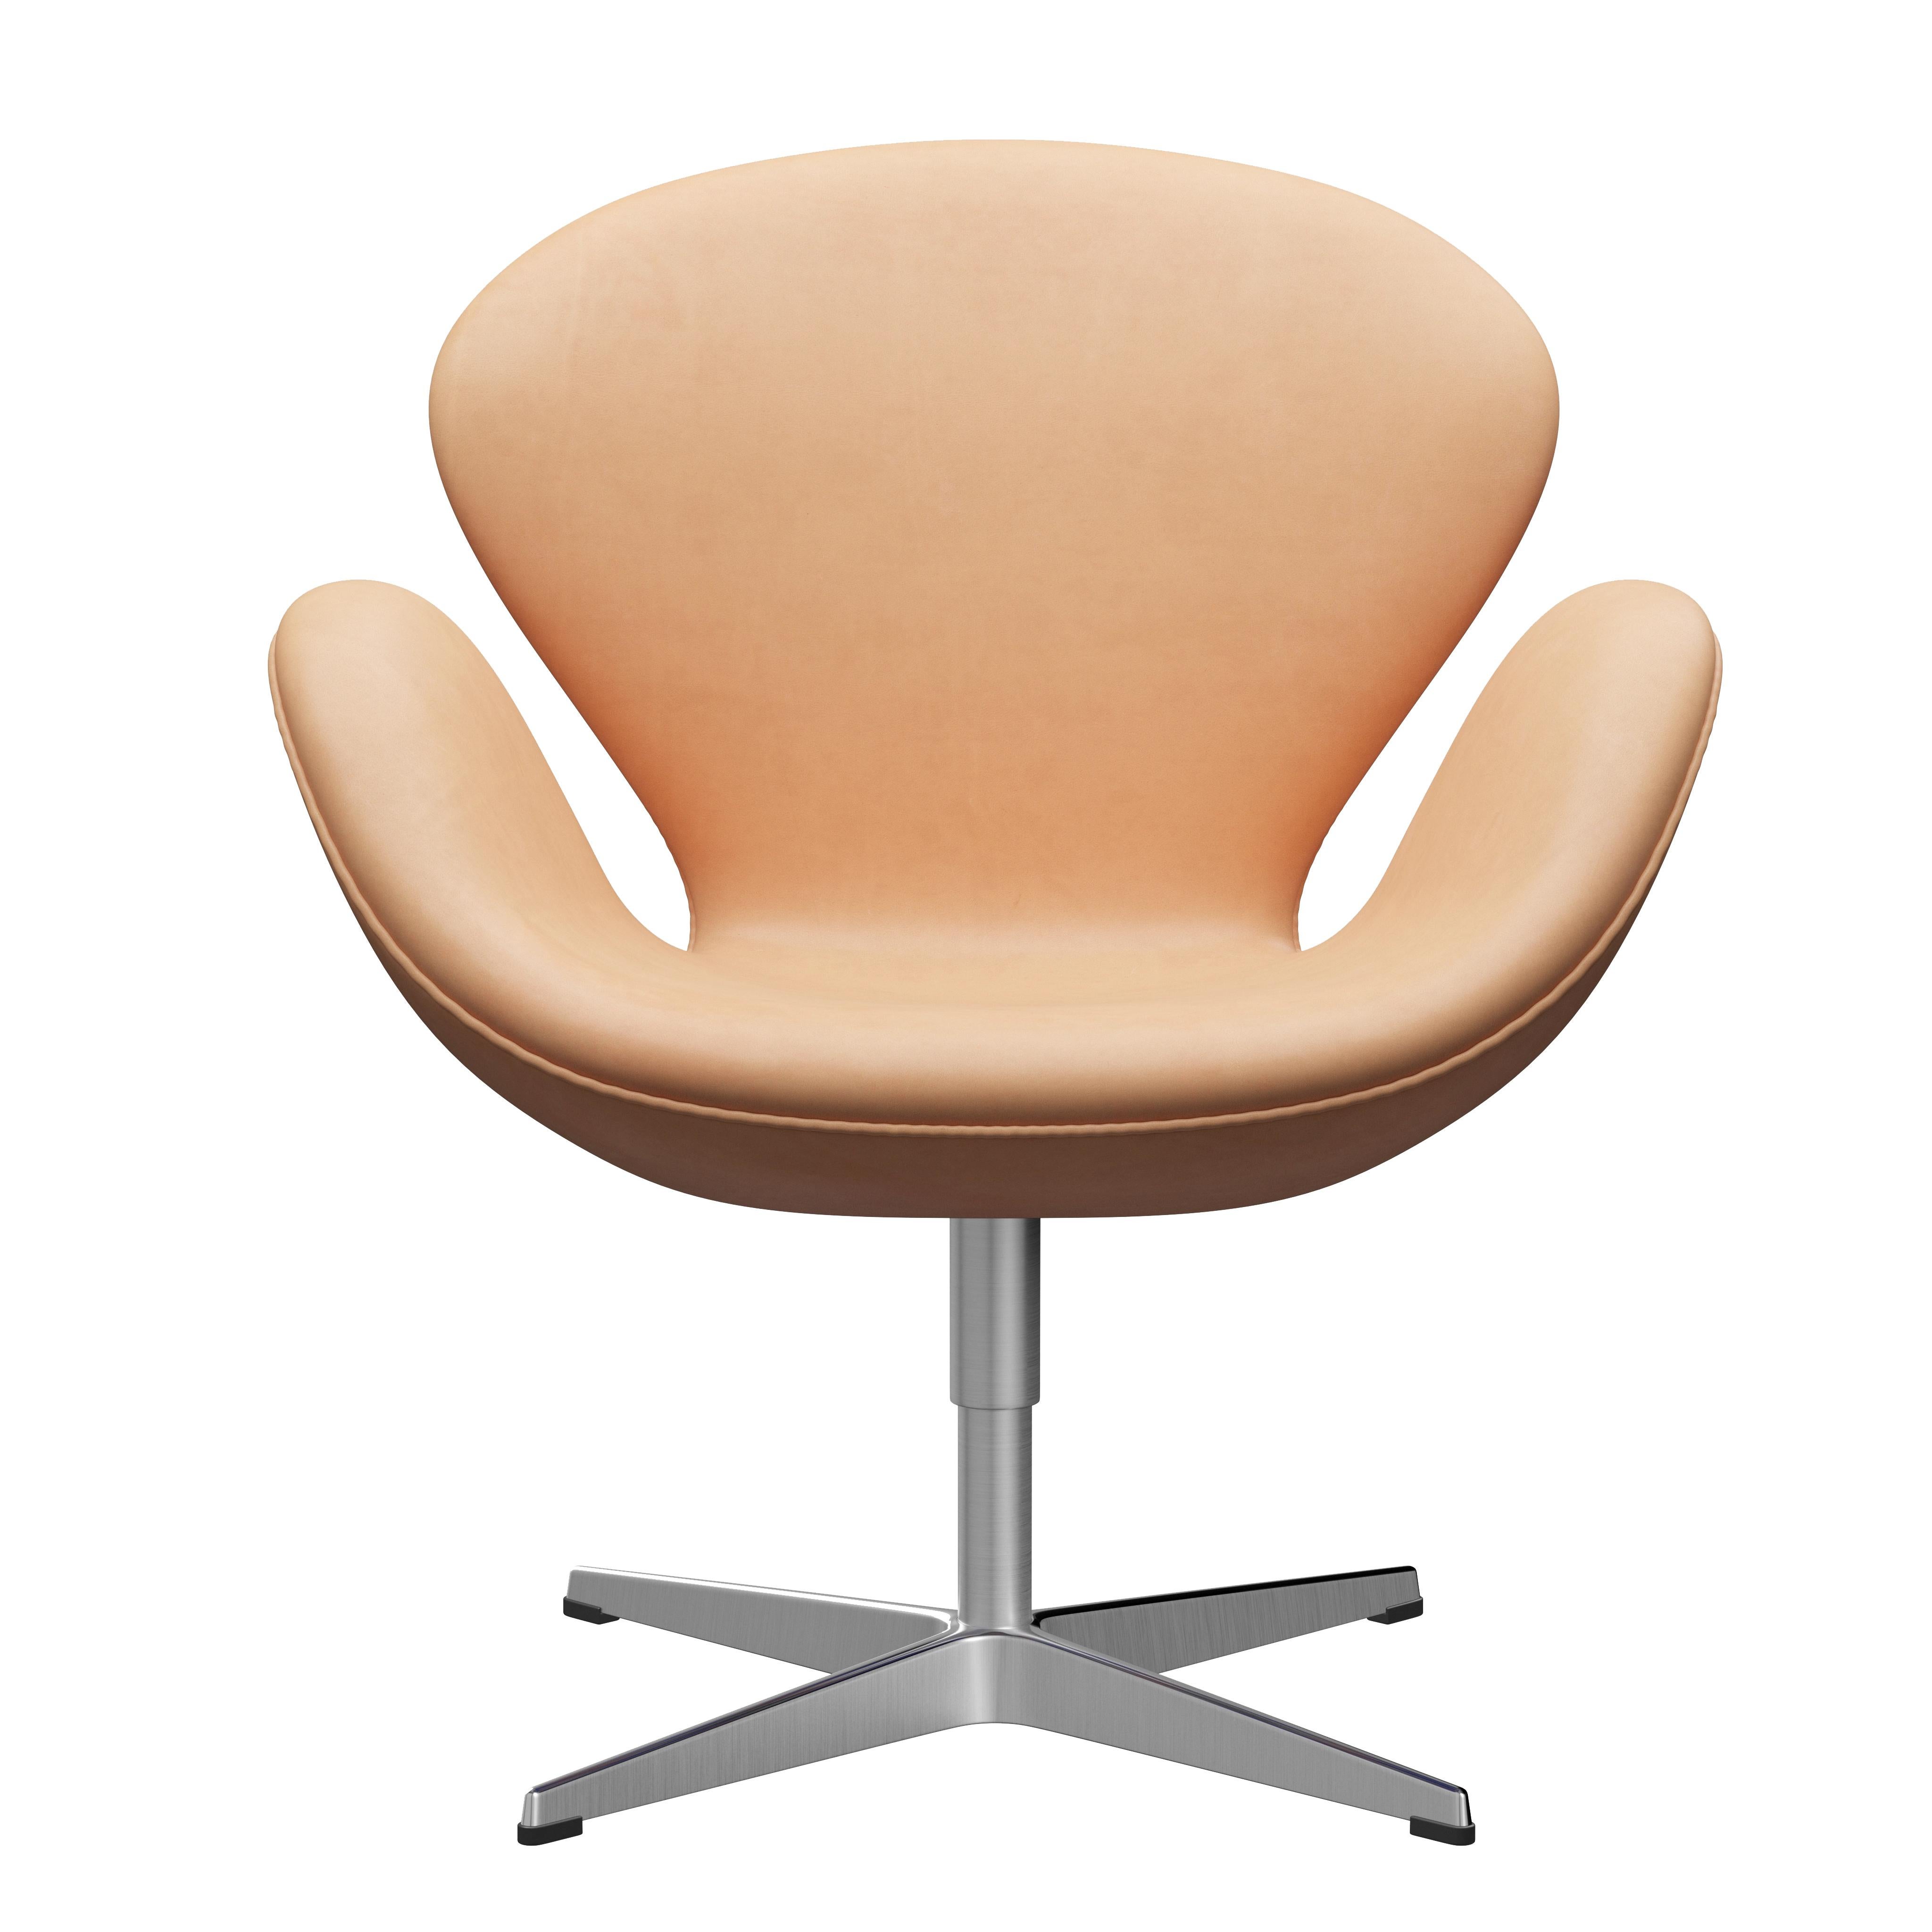 Arne Jacobsen 'Swan' Chair for Fritz Hansen in Leather Upholstery (Cat. 5) For Sale 12